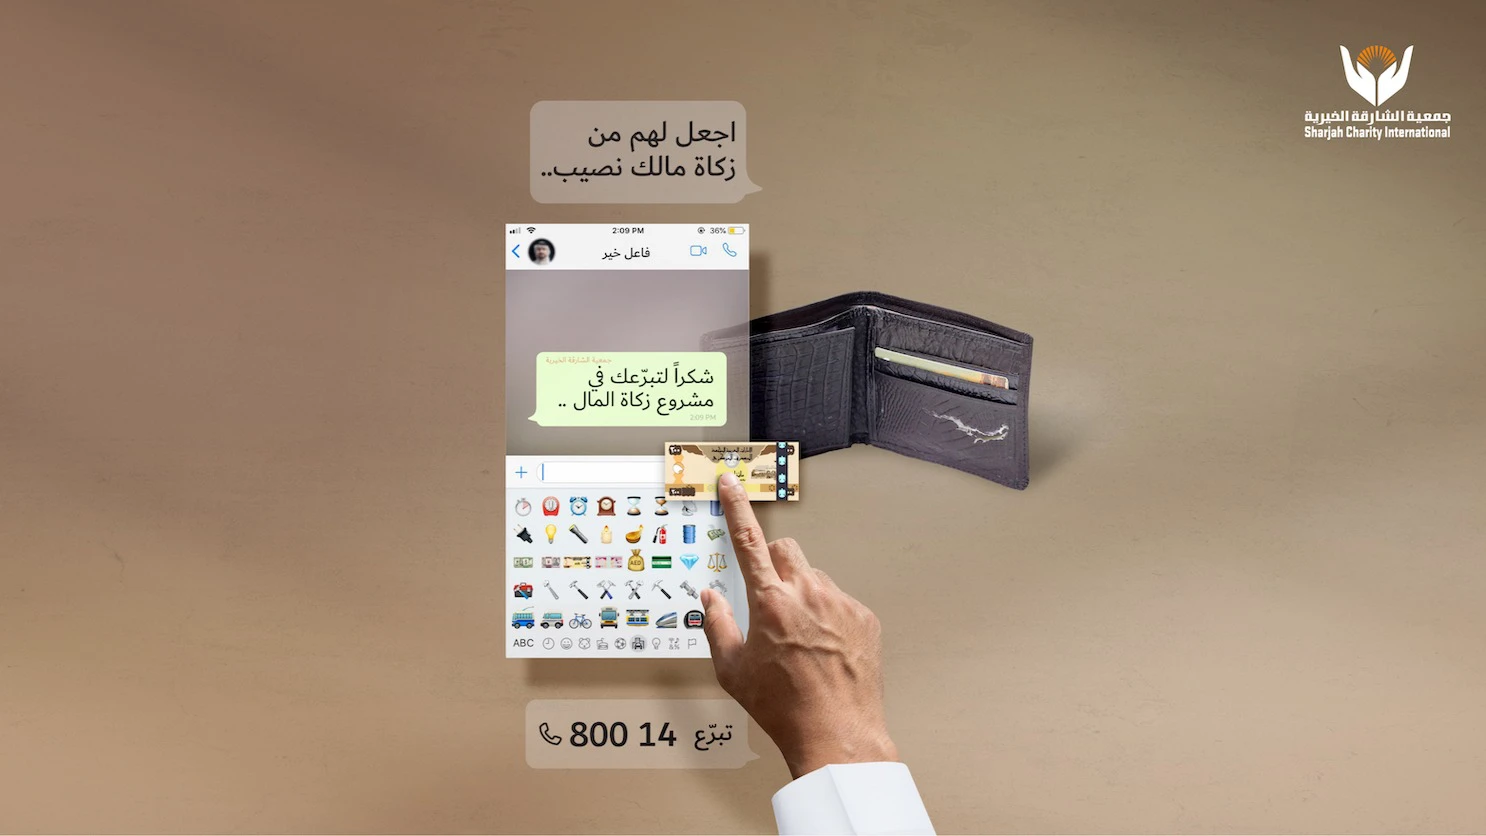 Sharjah Charity International - Emojis Ramadan Campaign - banner